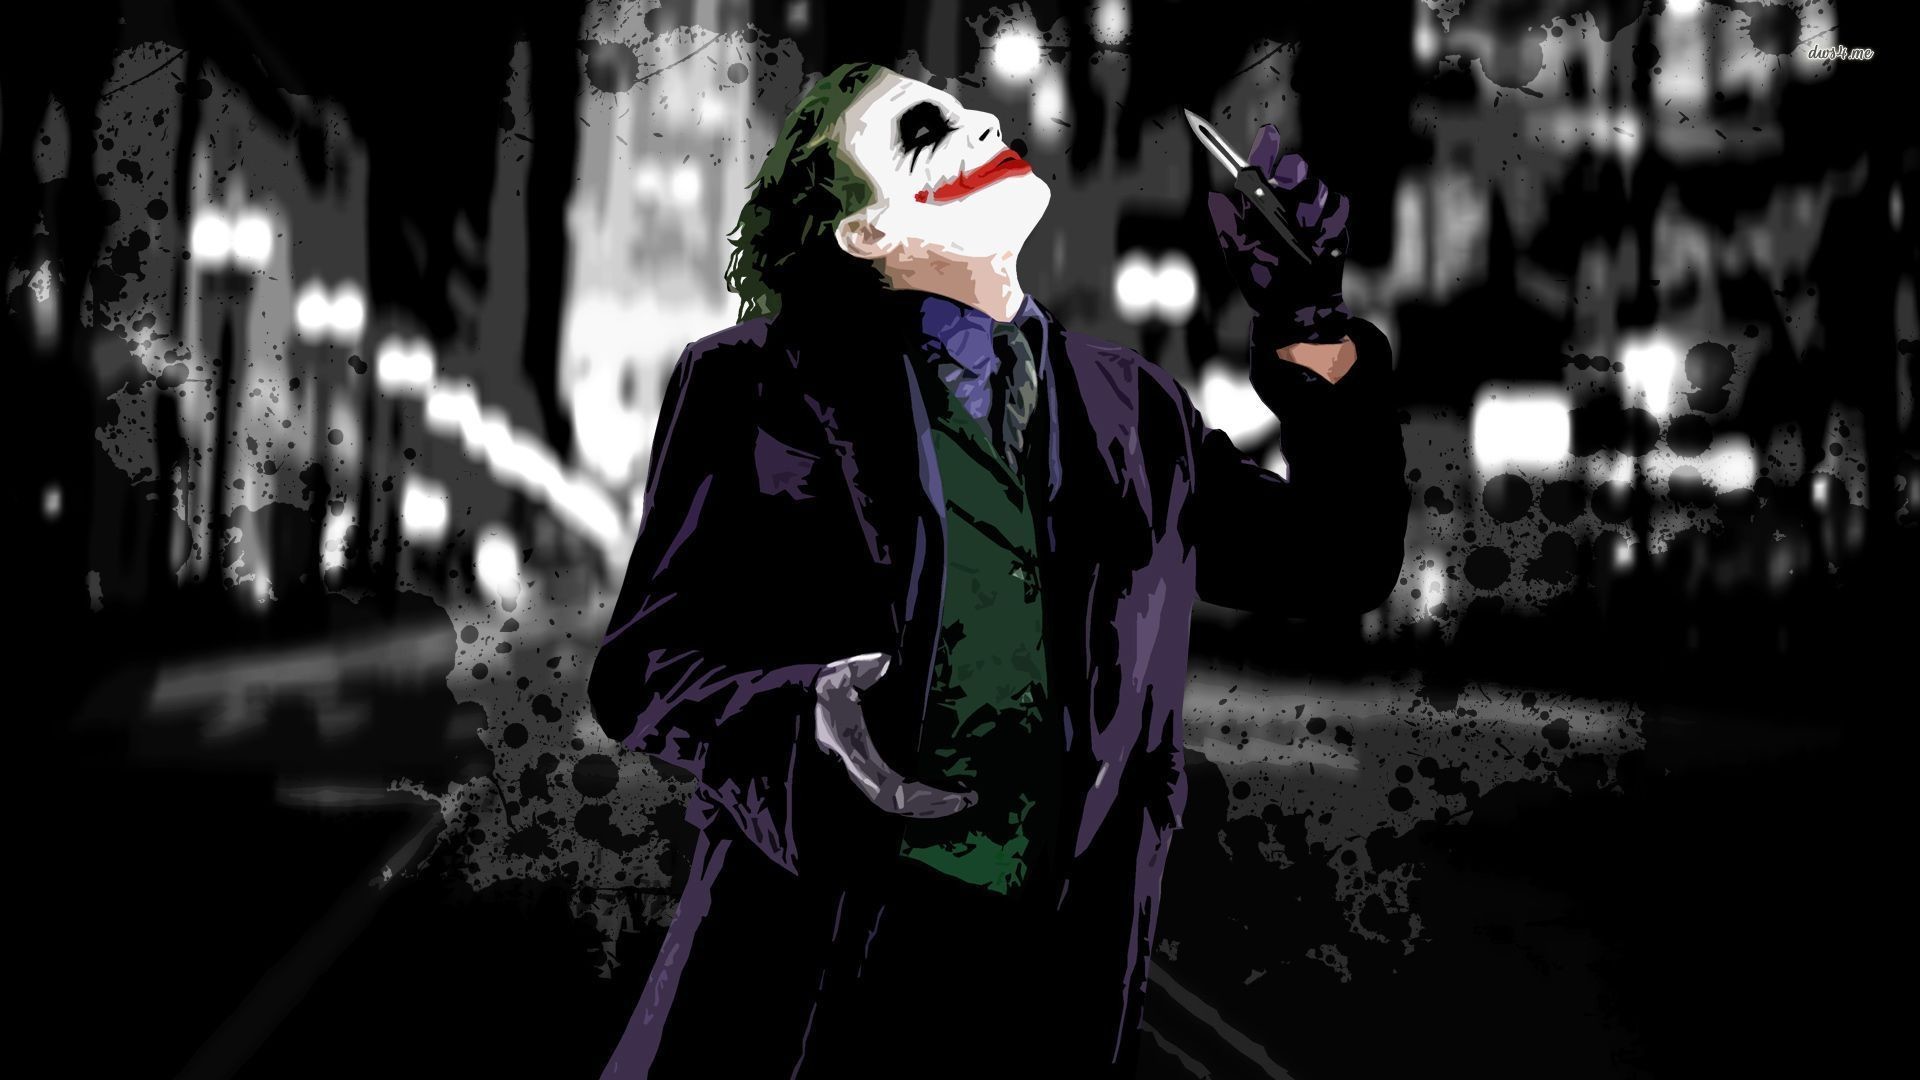 1920x1080 The Joker - The Dark Knight Image In HD 3930 Hd Wallpapers .